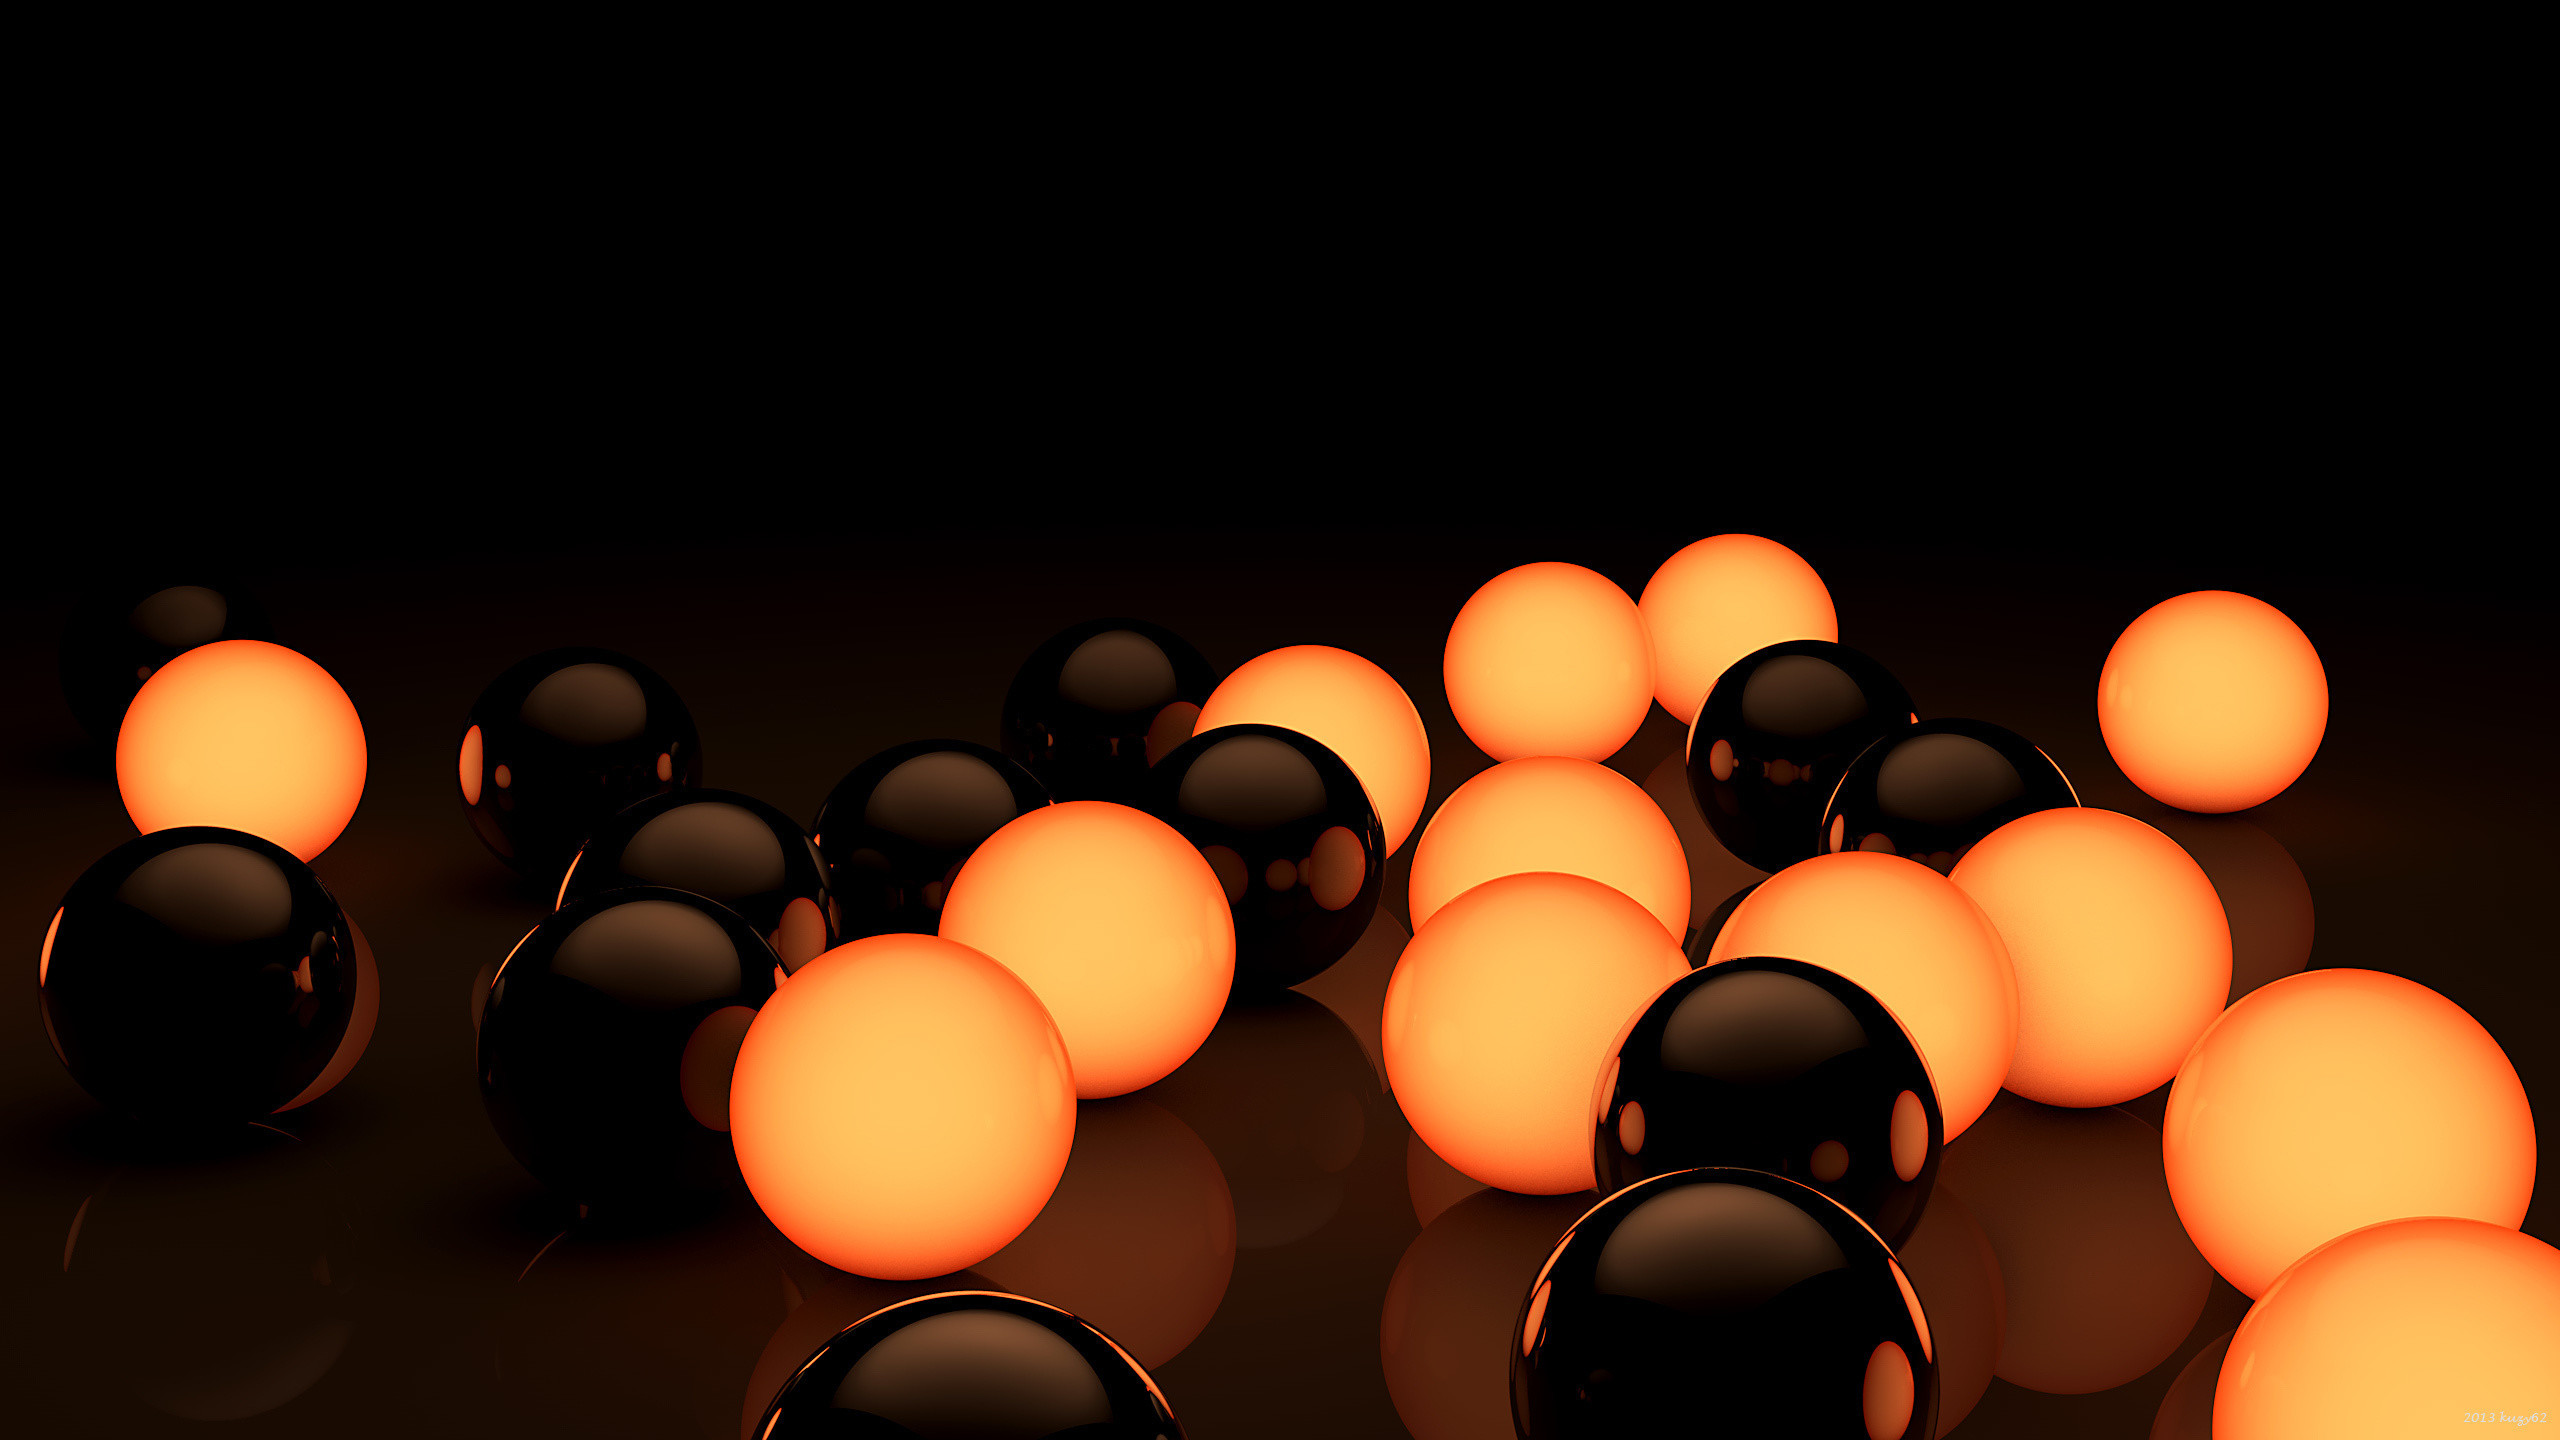 2560x1440 Black and Orange Bubbles in Wallpaper 3D